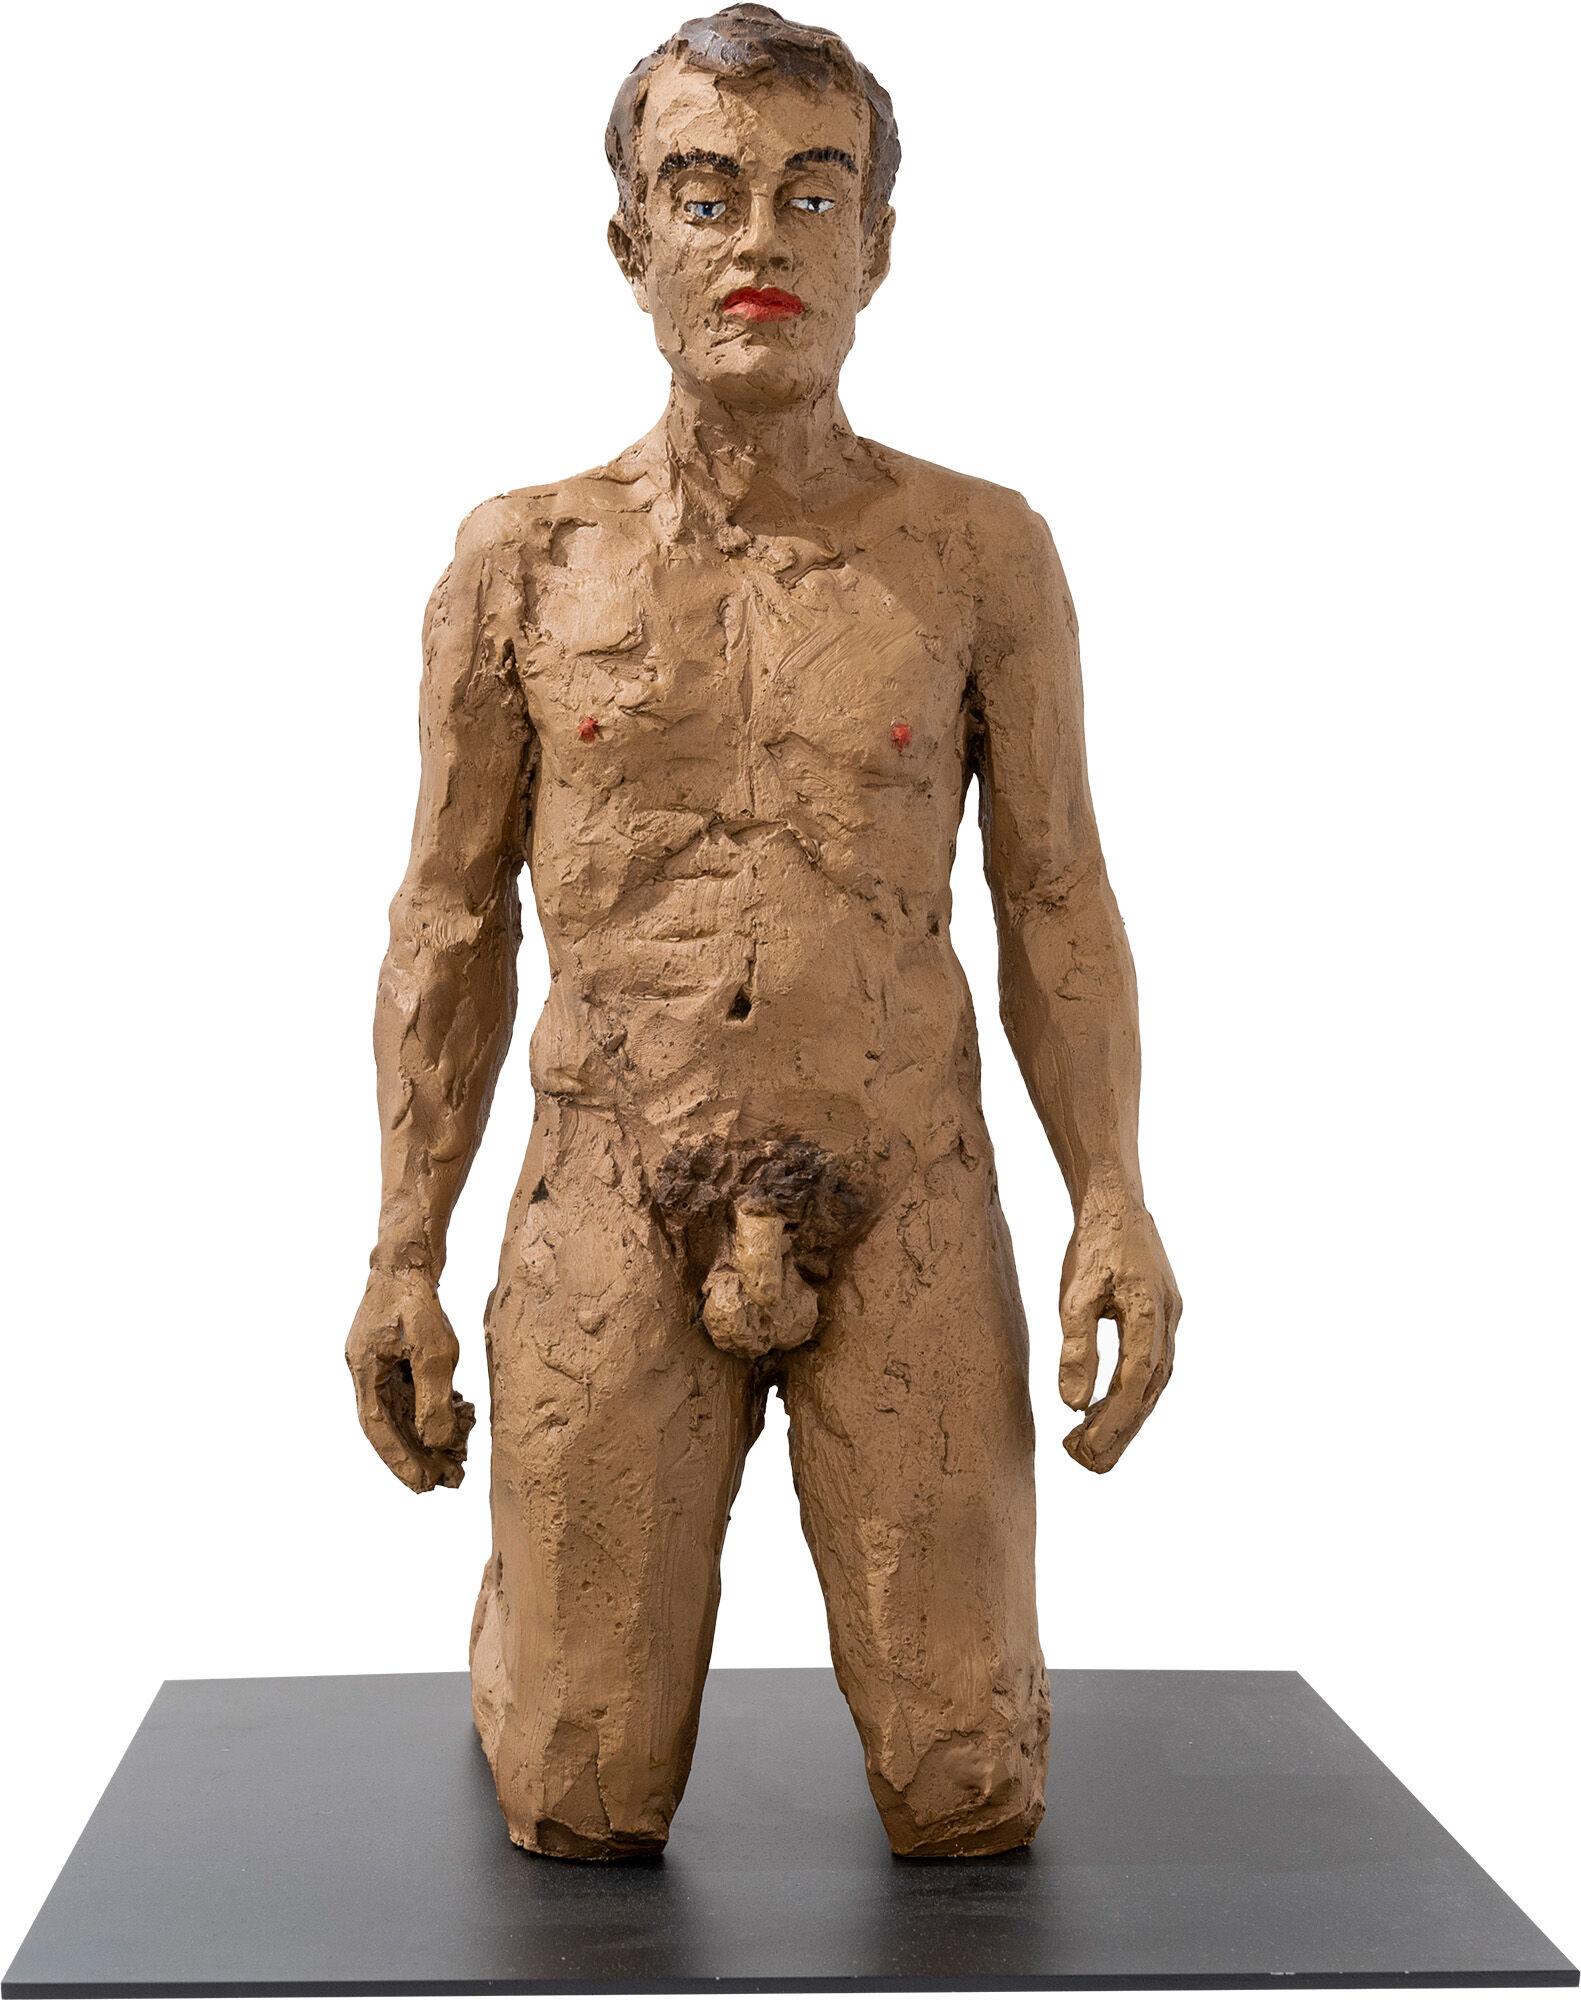 Sculpture "Kneeling Man" (2012), bronze by Stephan Balkenhol